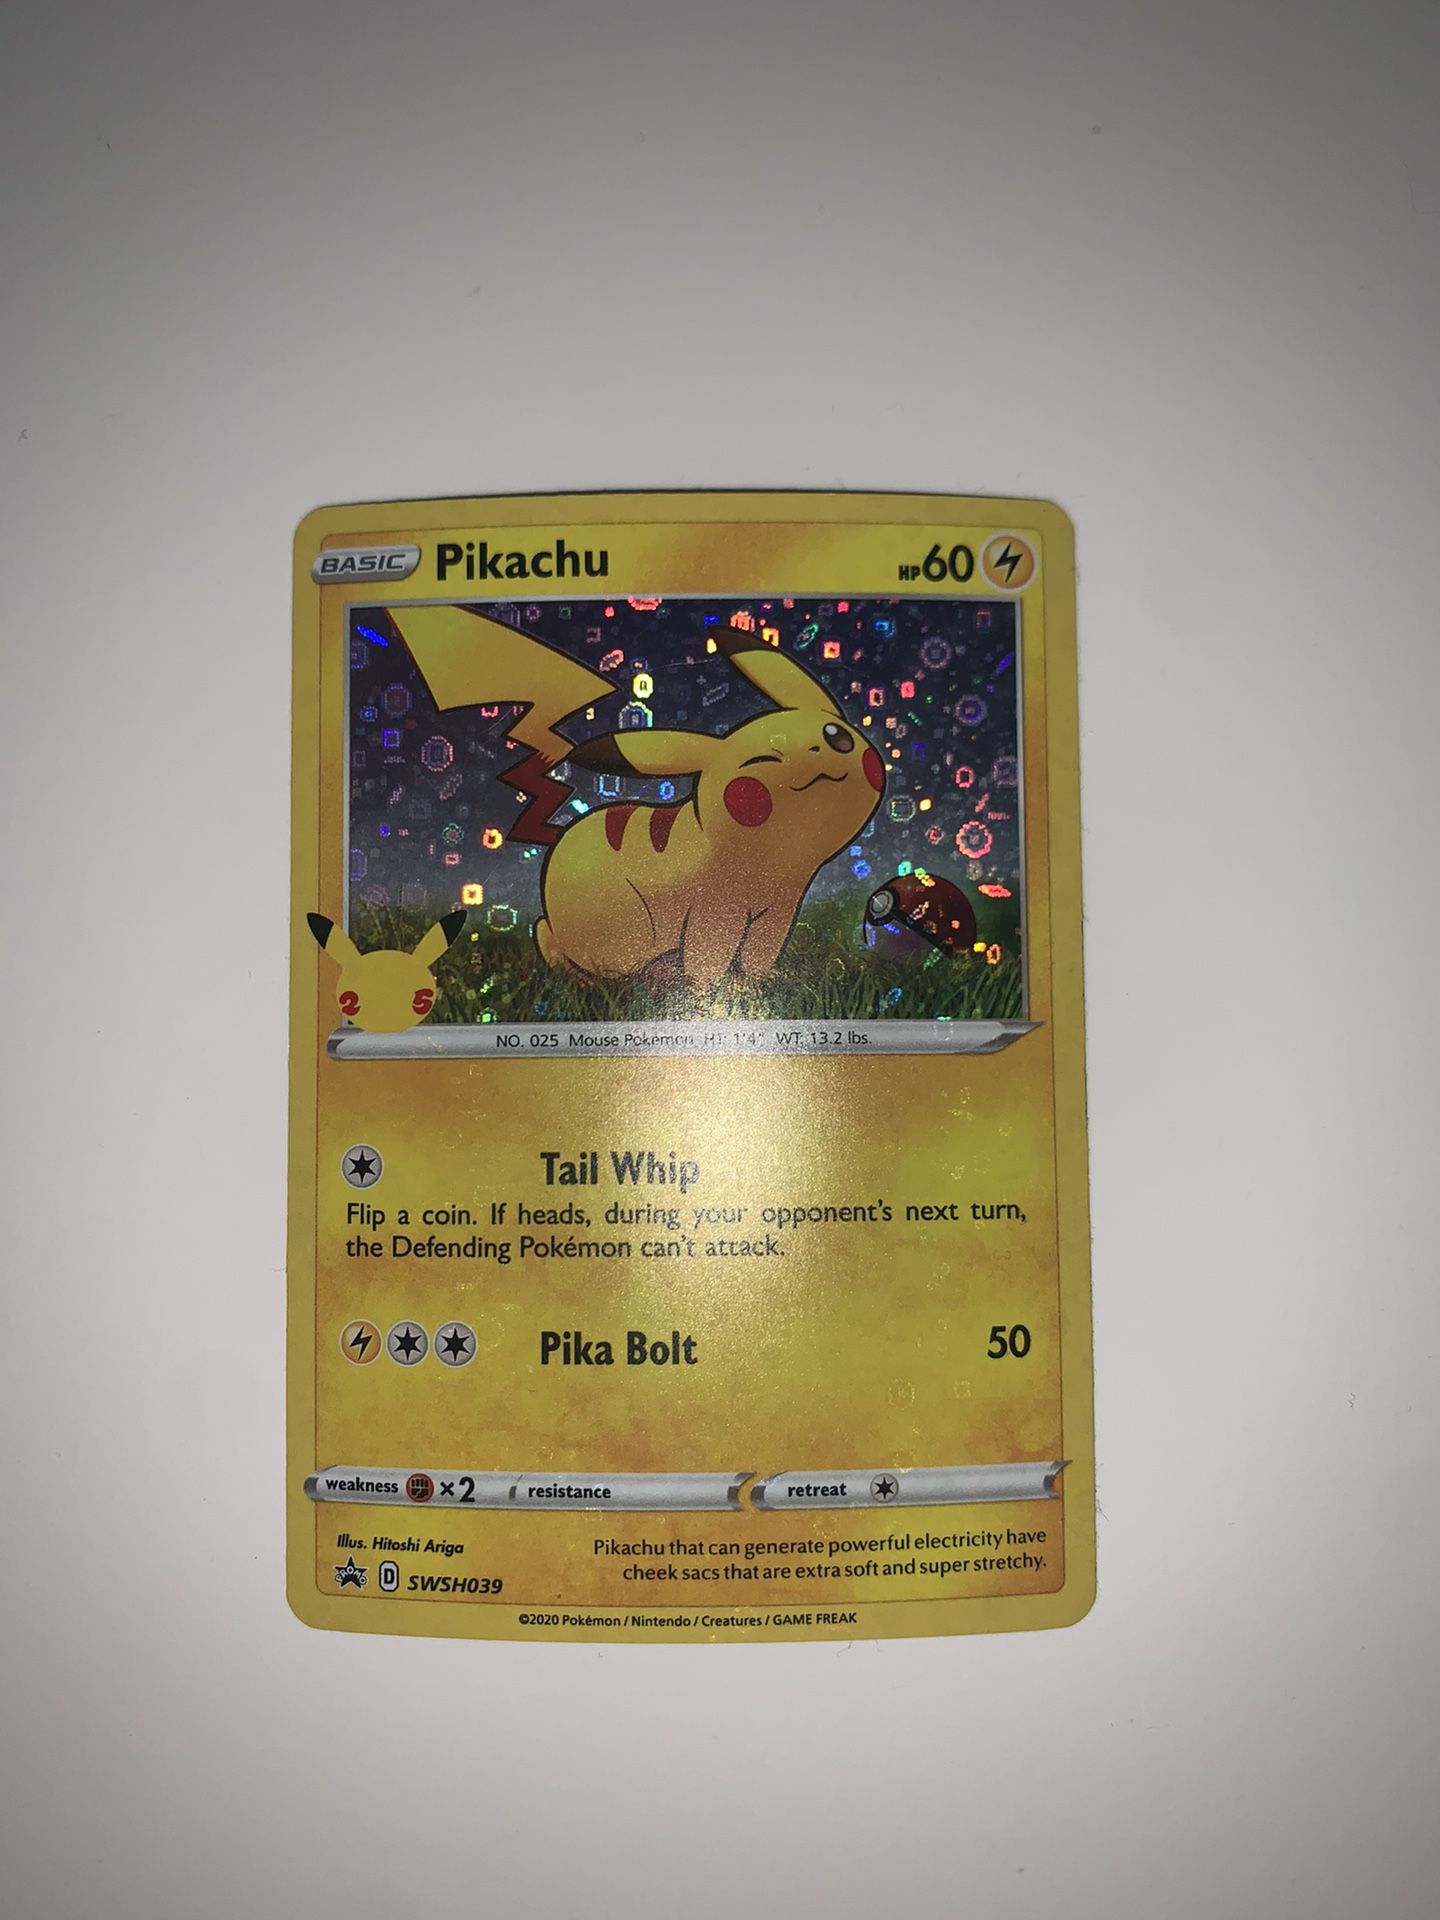 25th anniversary stamped pikachu card